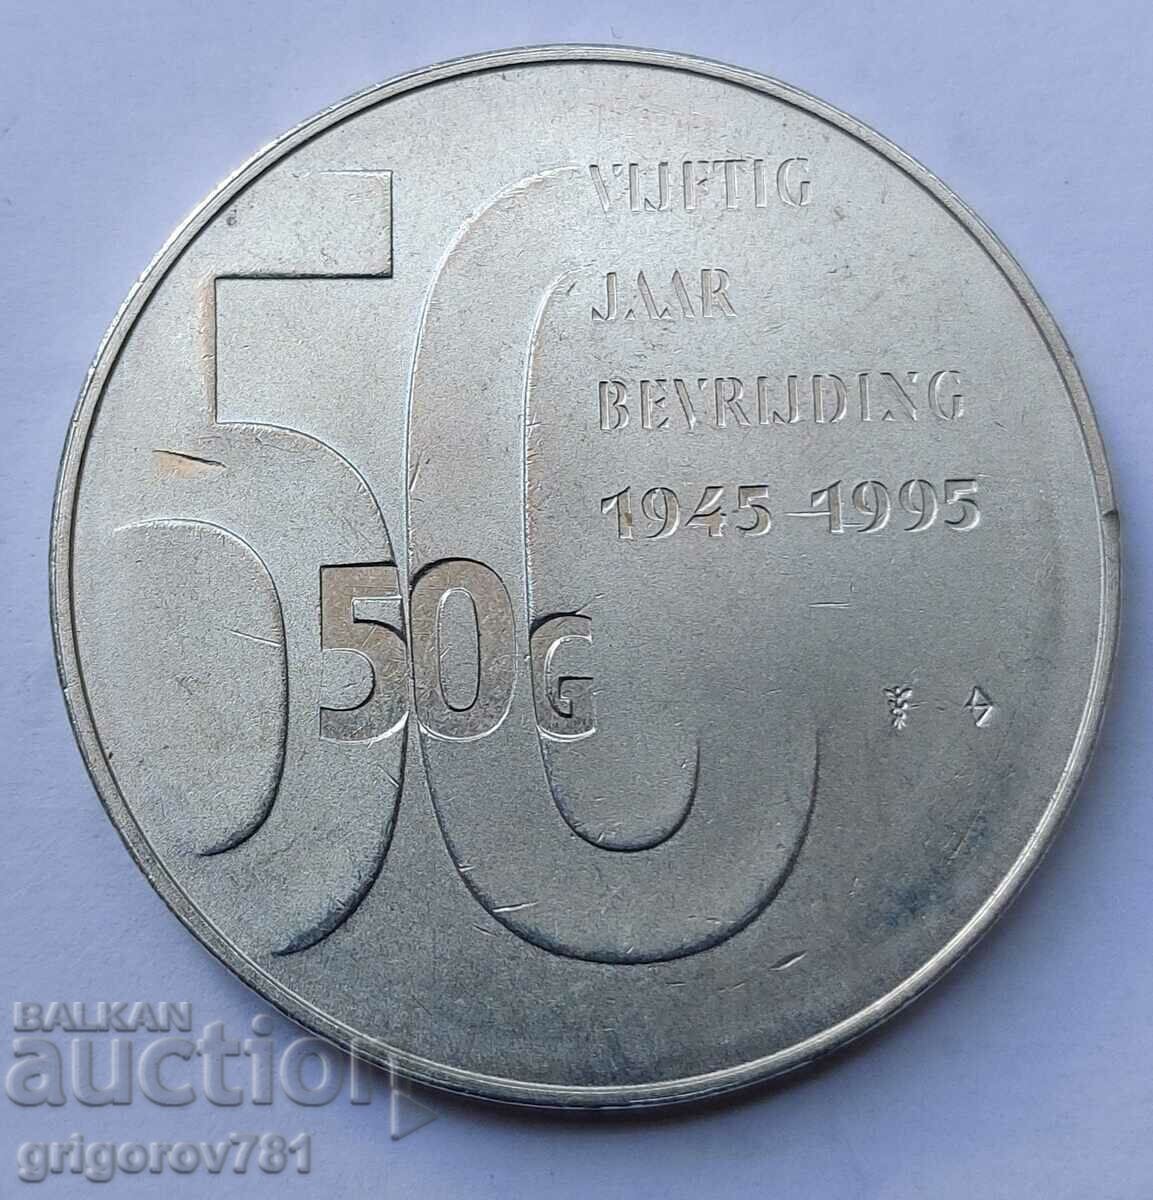 50 Guilder Silver Netherlands 1995 - Silver Coin #4